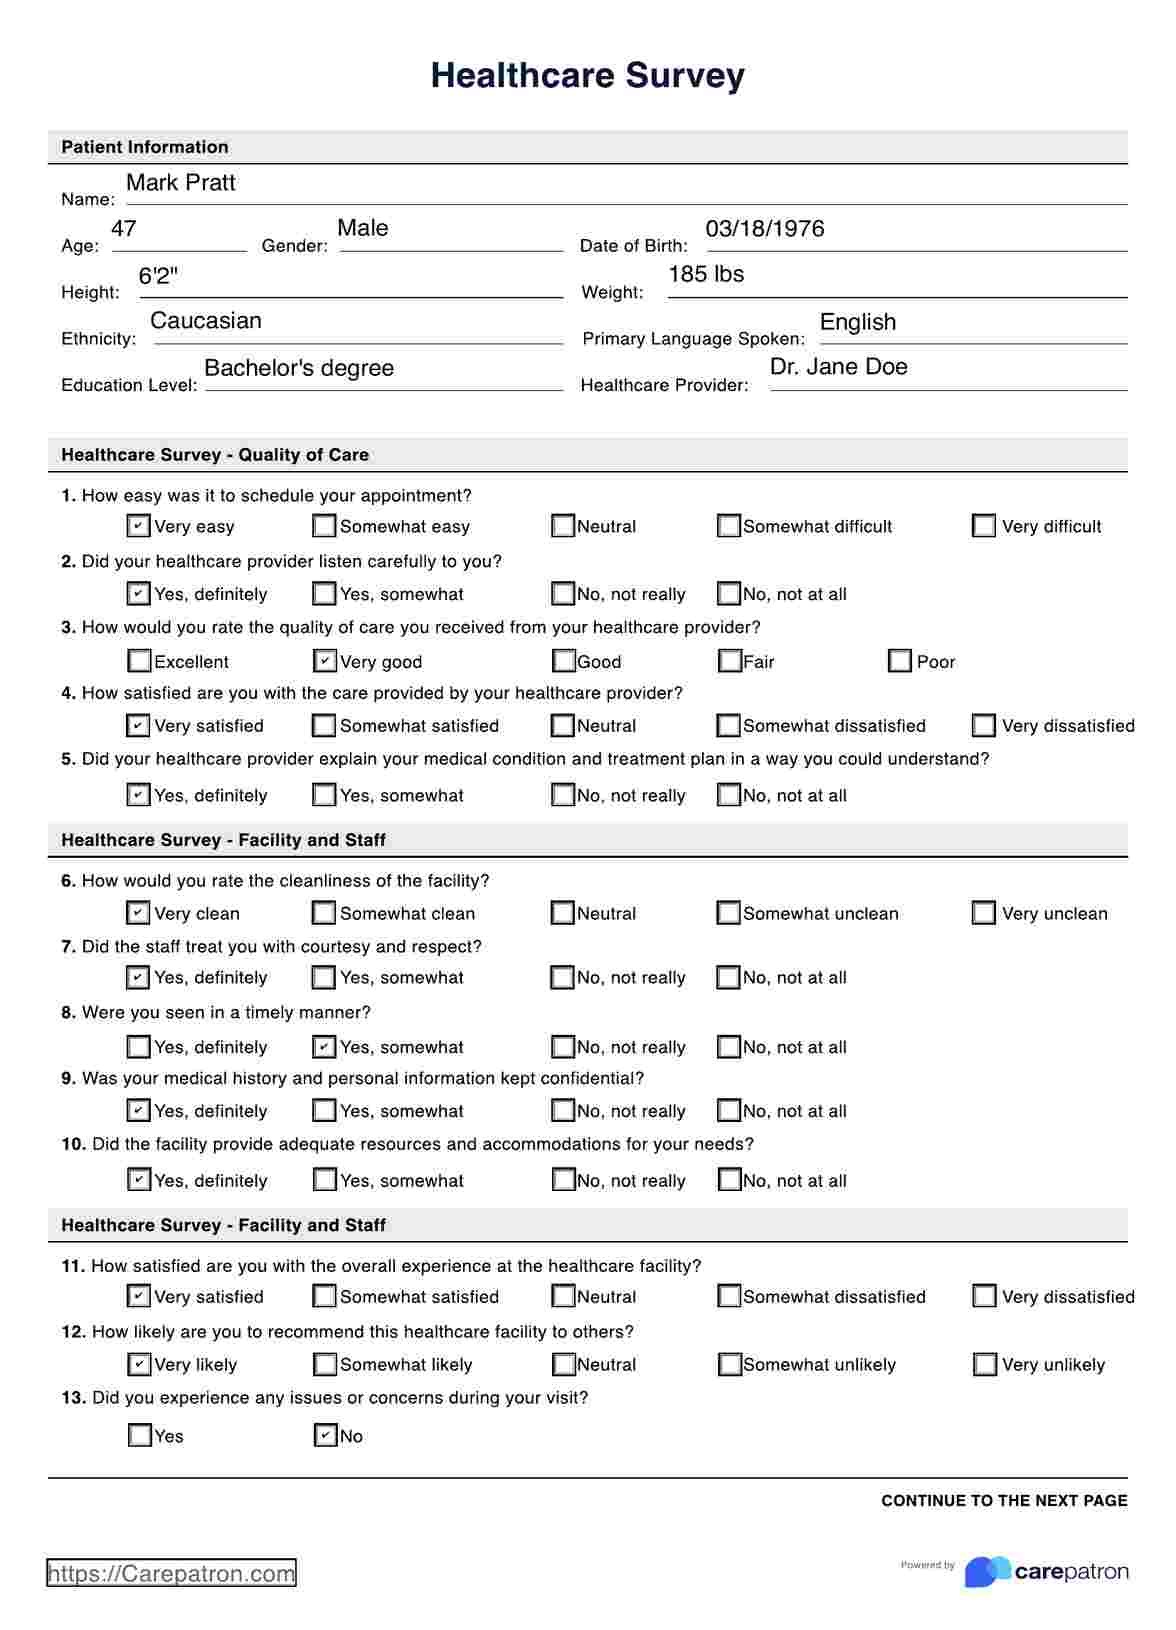 Healthcare Survey PDF Example